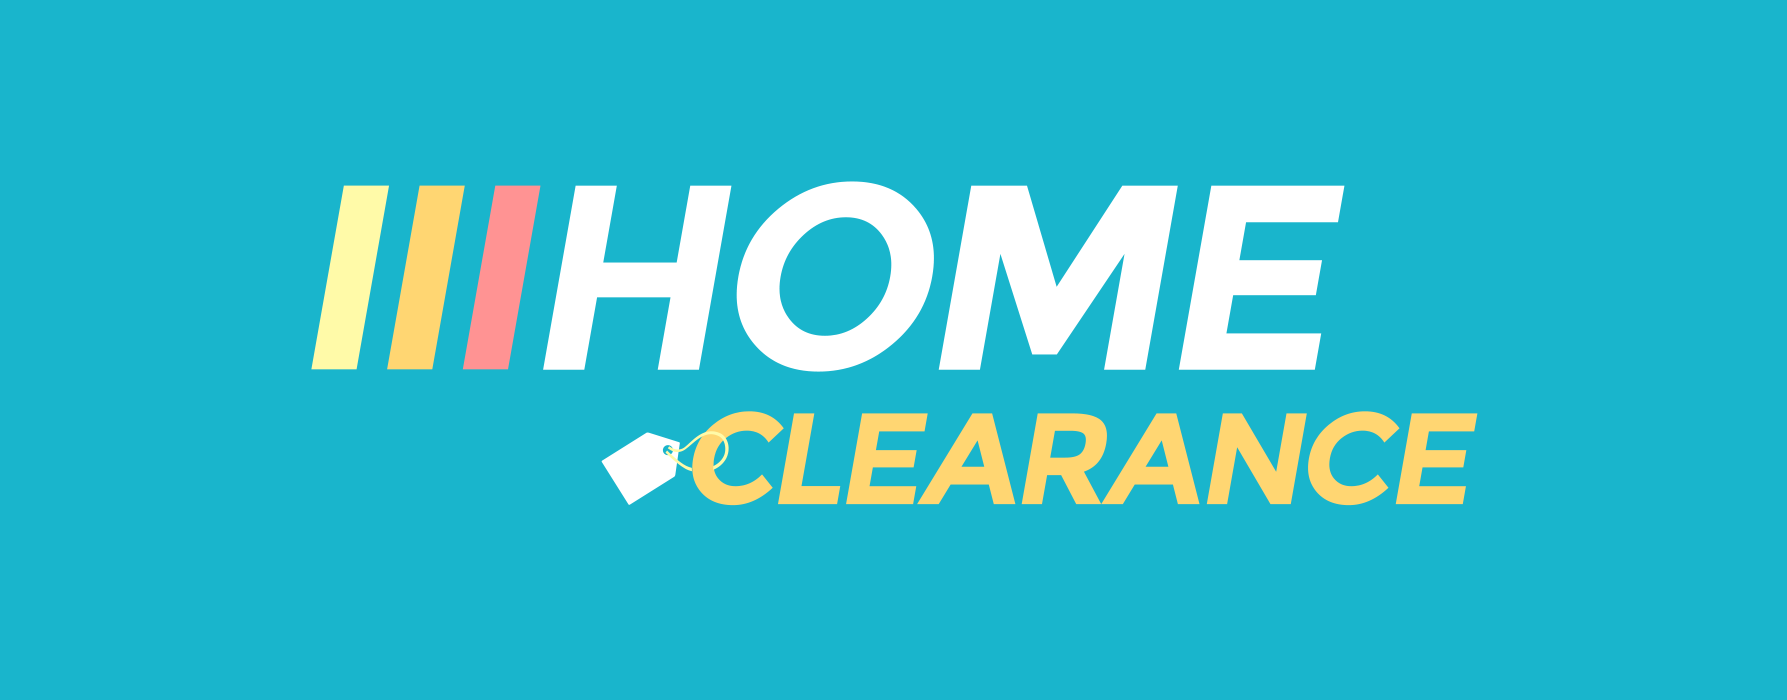 All Home Clearance  Australia Promo Codes & Vegan Specials